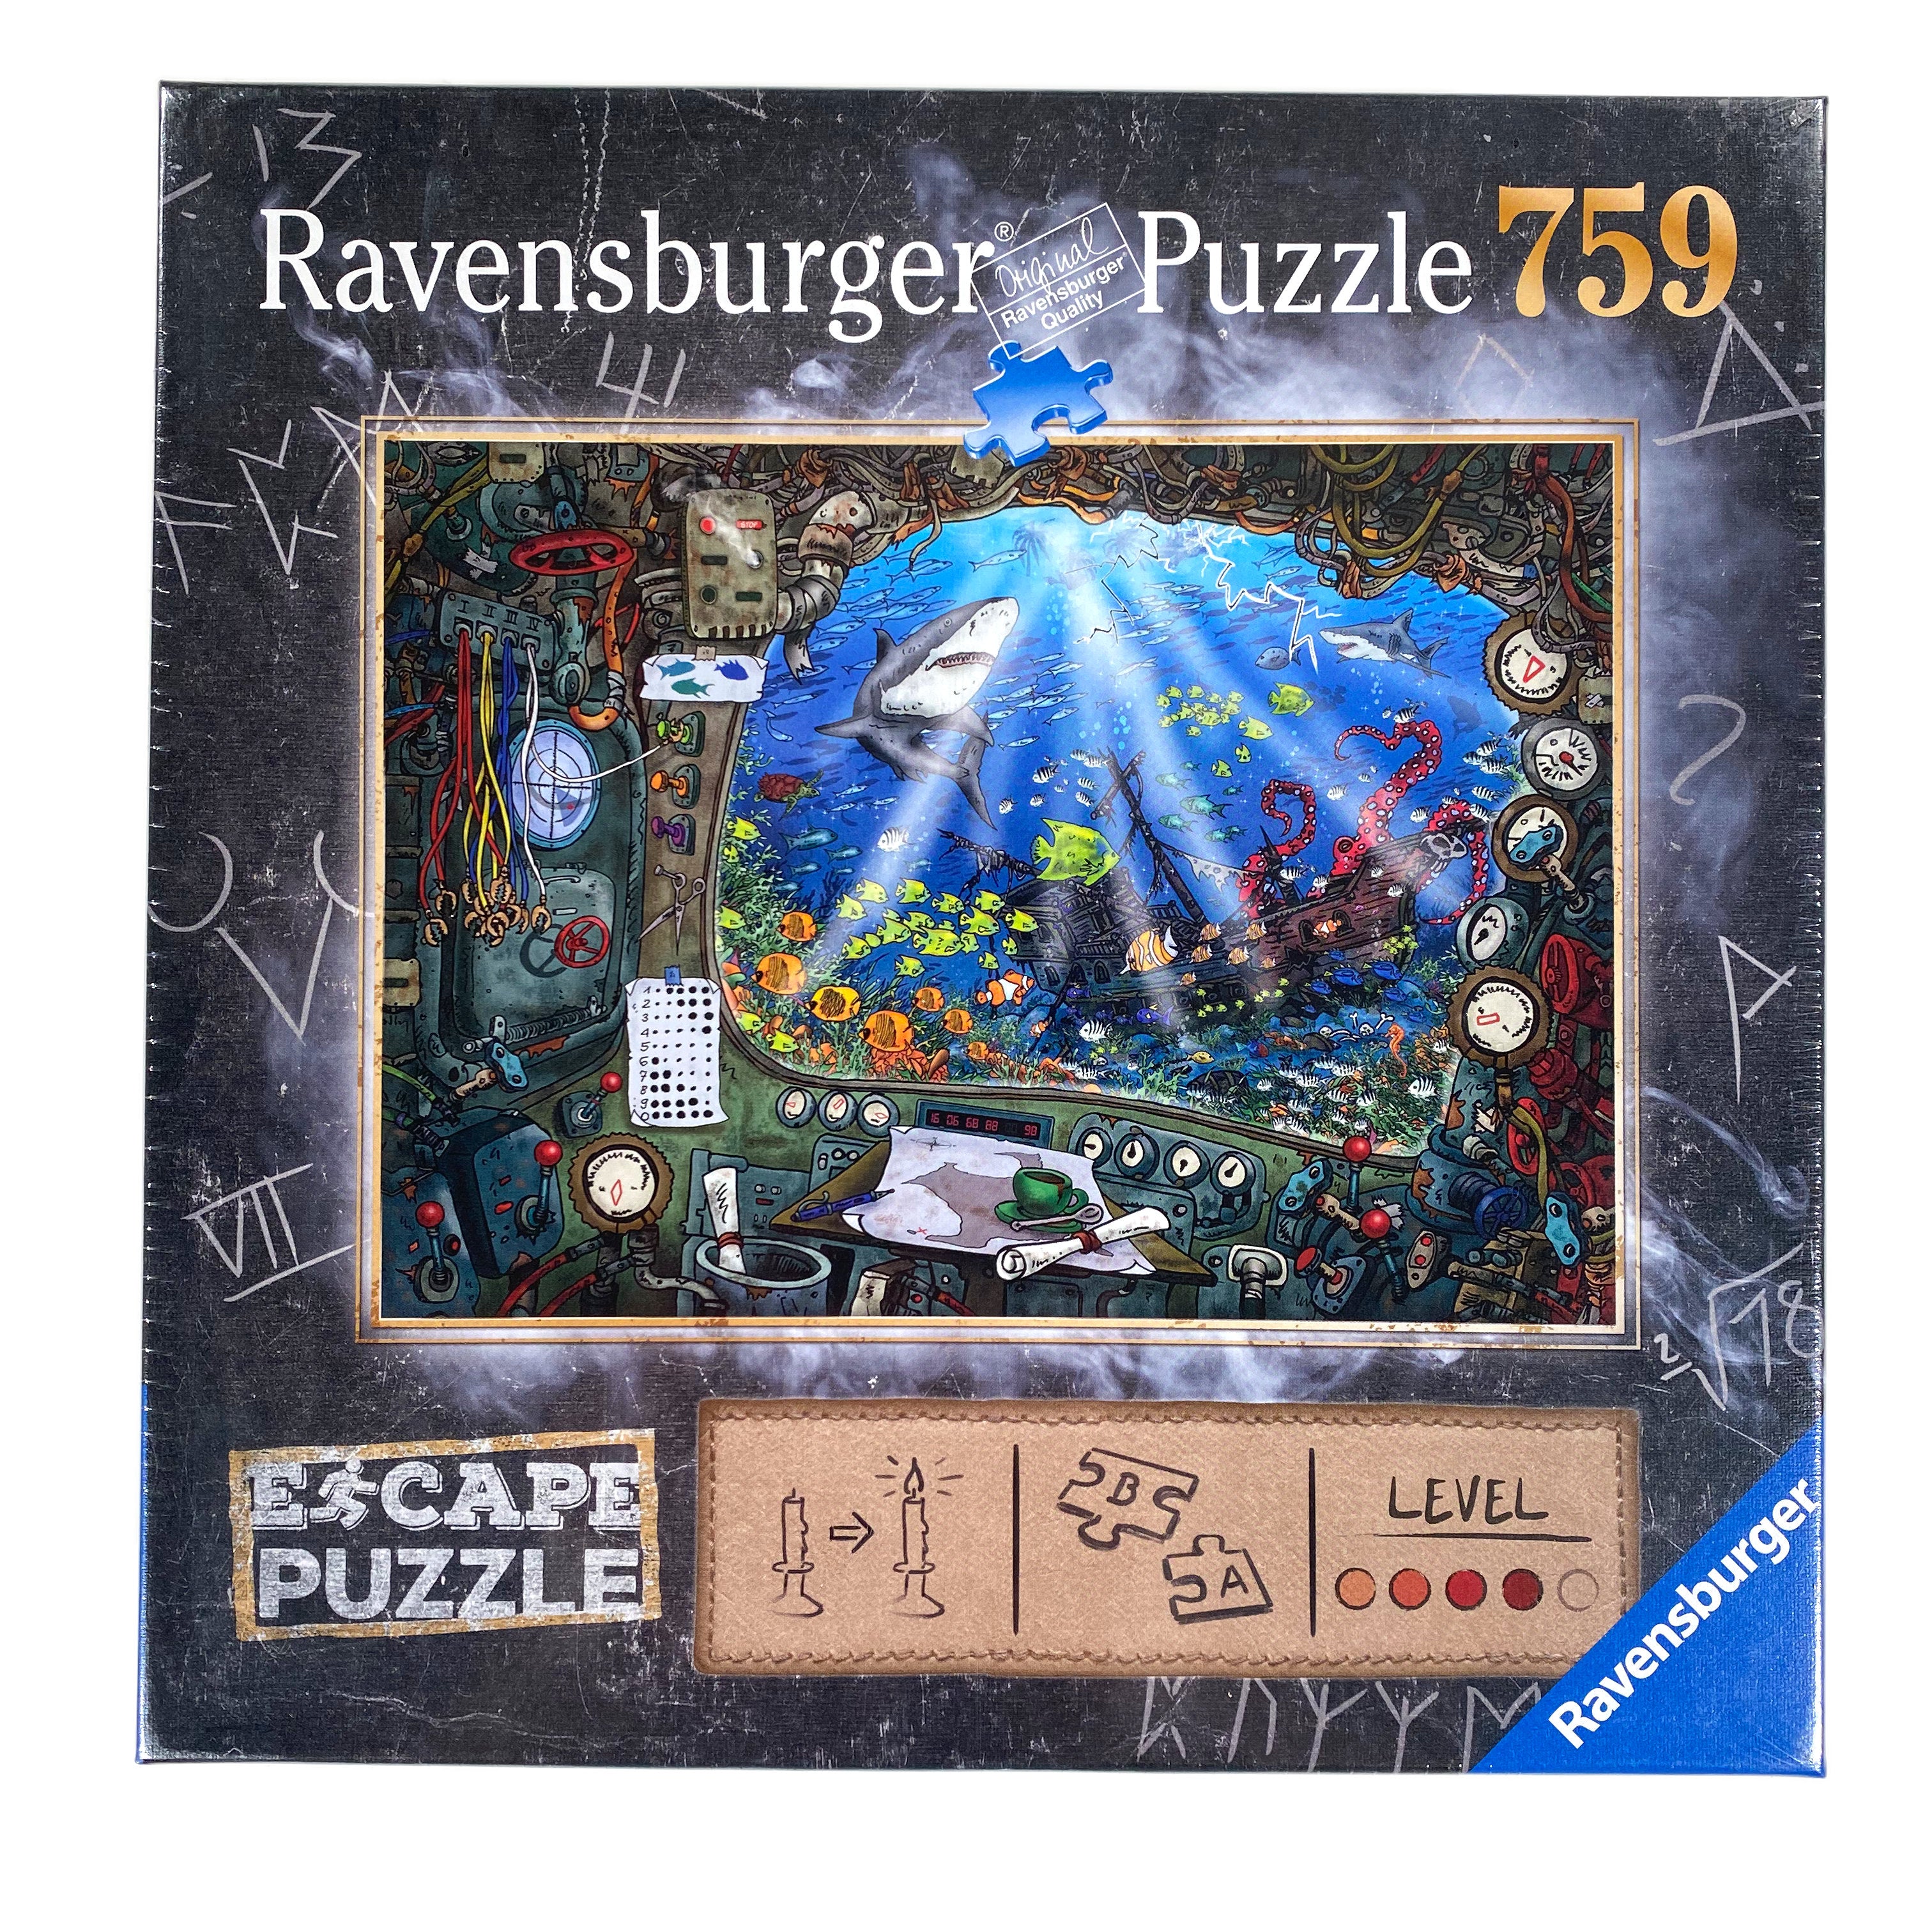 Submarine 759 Piece Escape Puzzle    